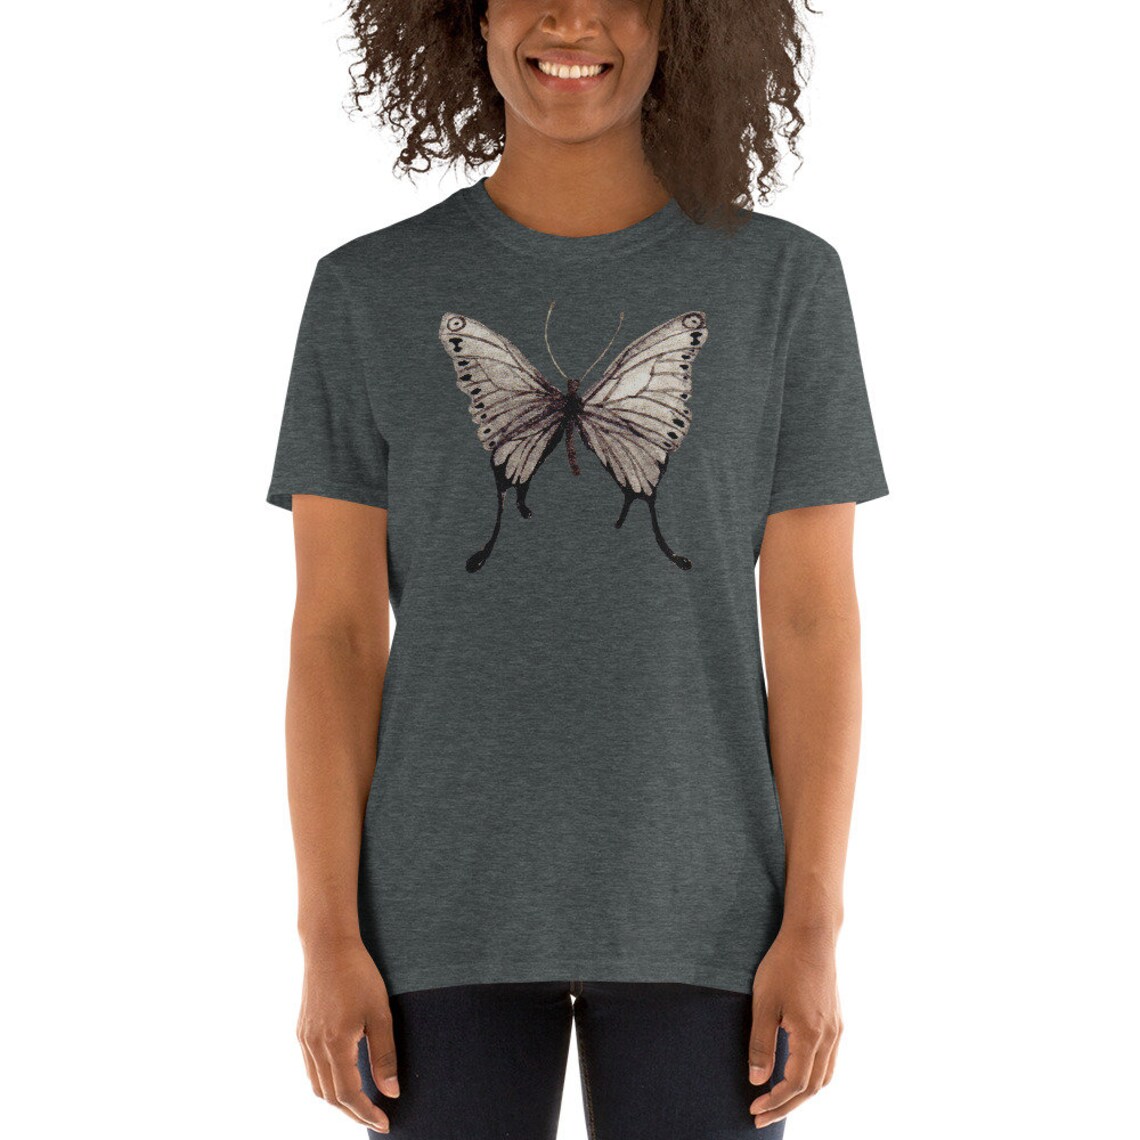 Black Butterfly T-shirt Butterfly Black T-shirt - Etsy